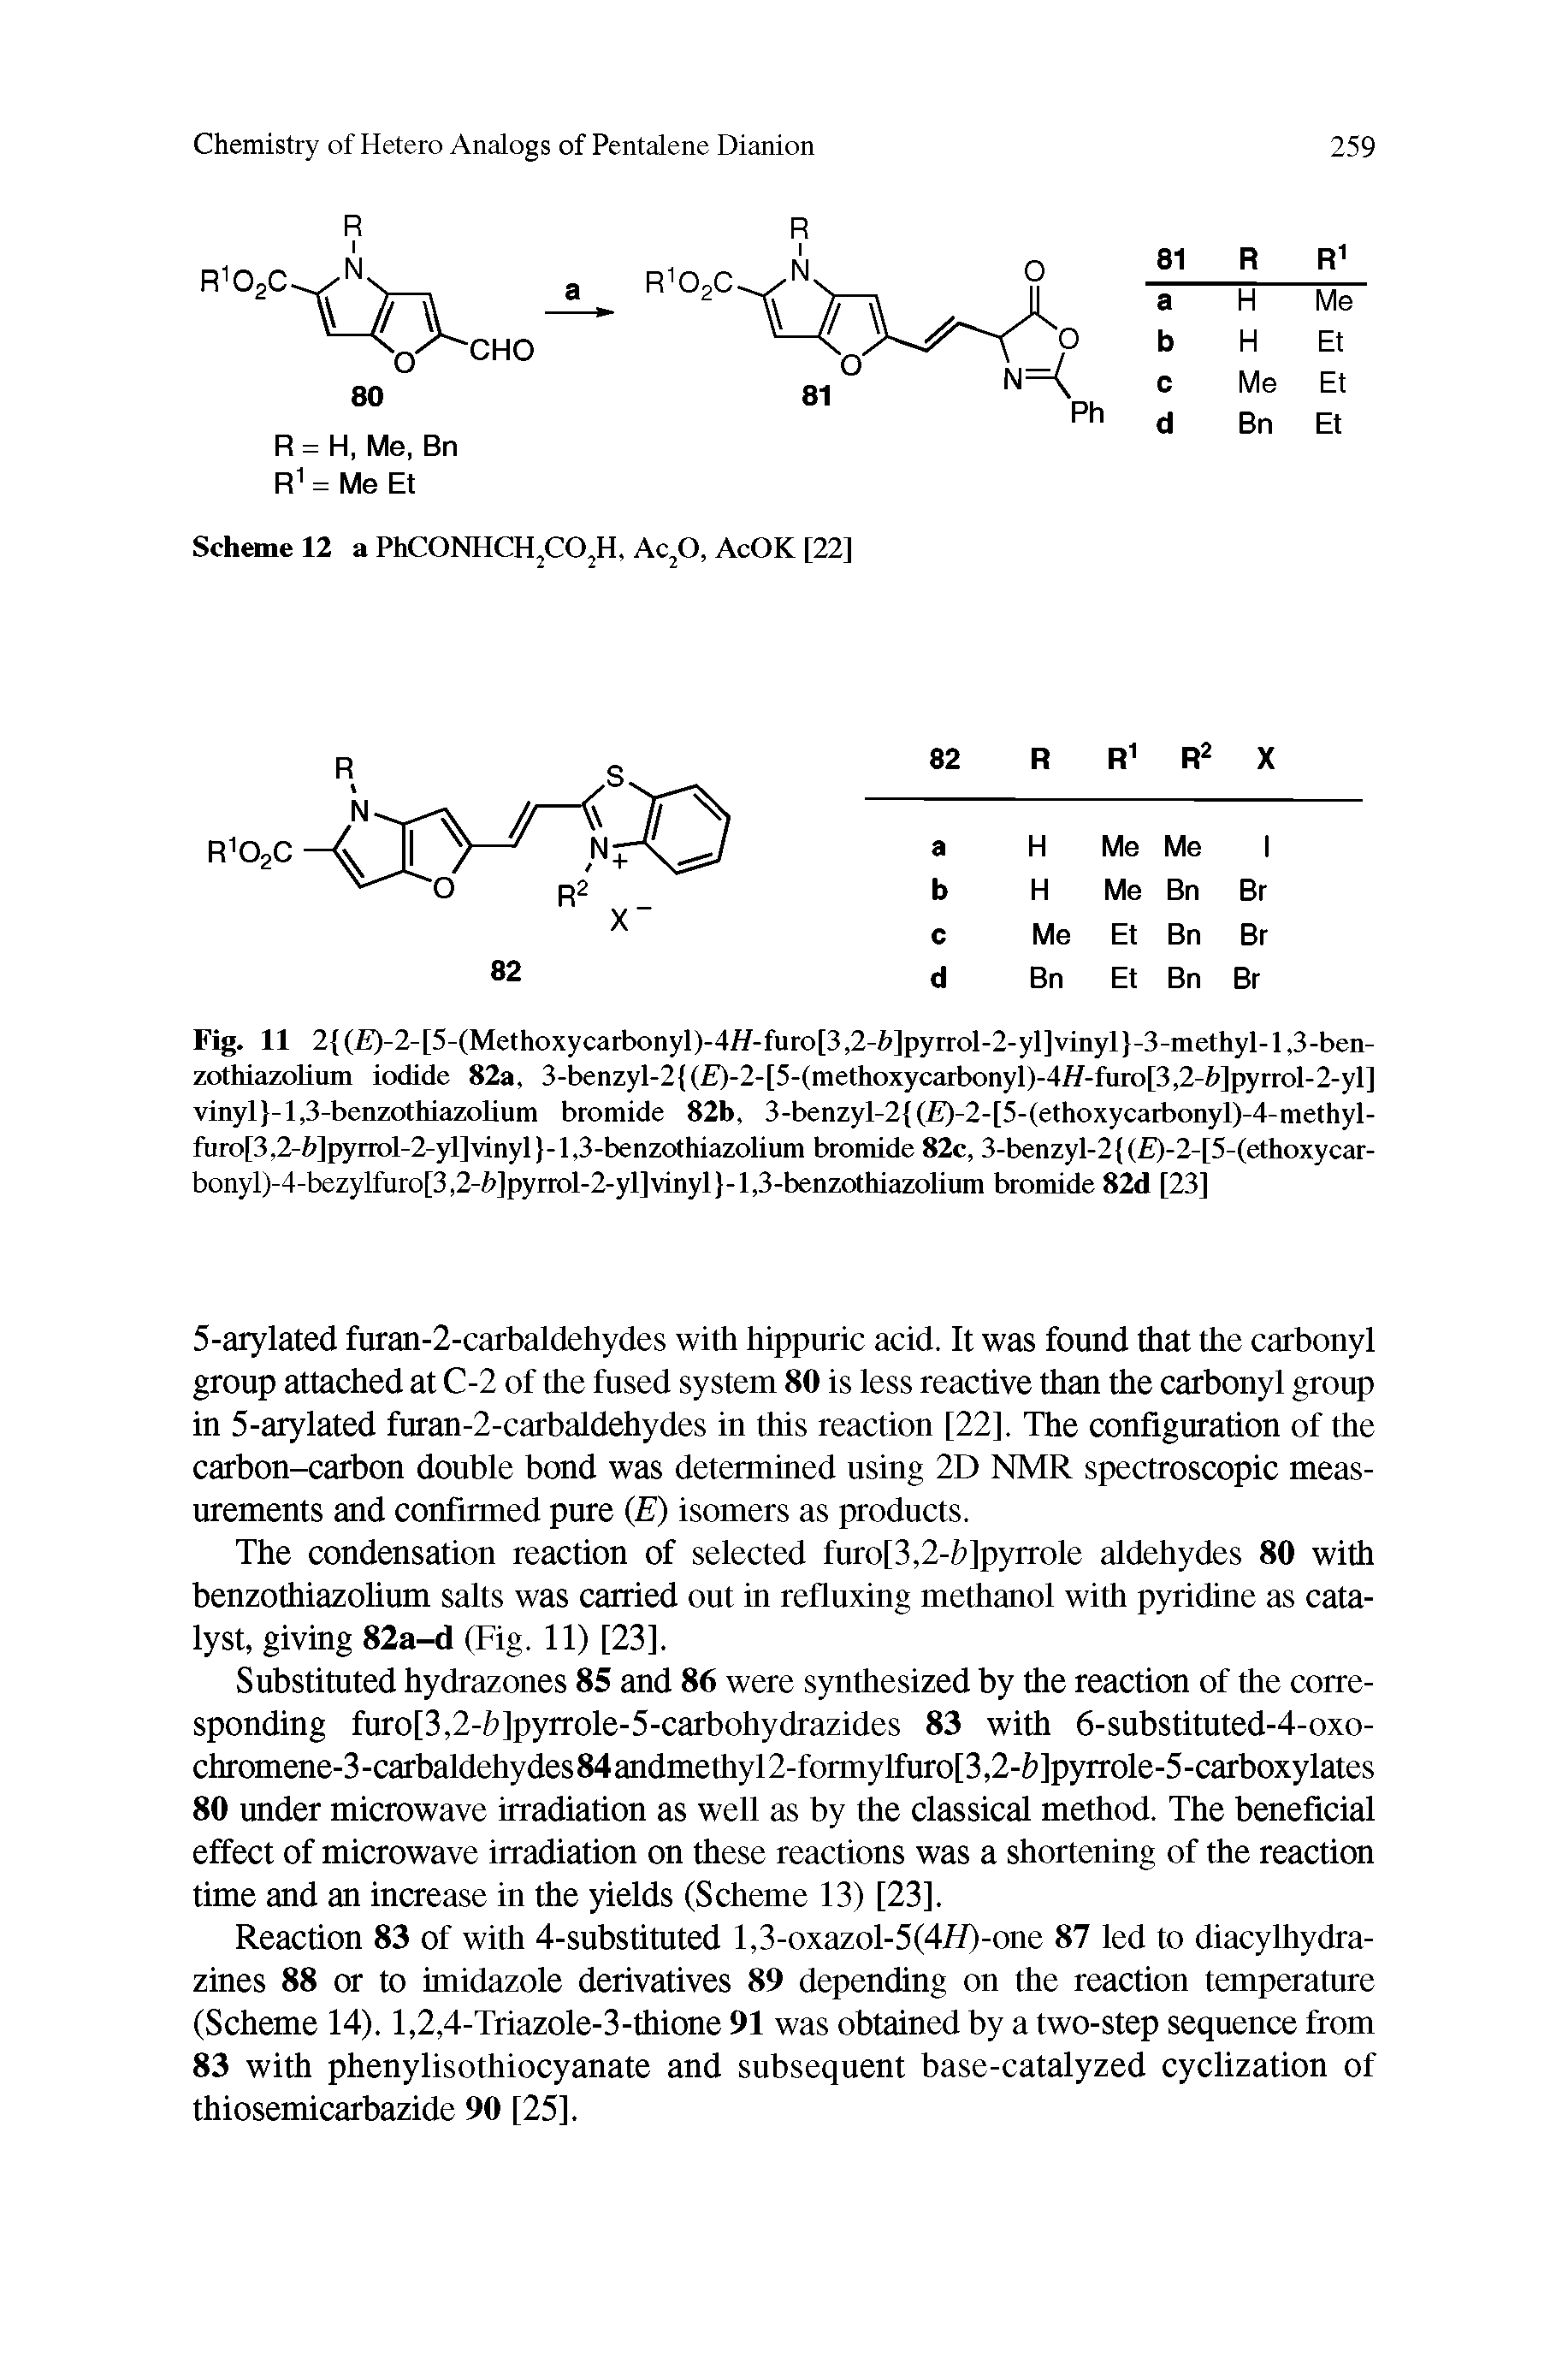 Fig. 11 2 (E)-2-[5-(Methoxycarbonyl)-4//-furo[3,2-Z>]pyrrol-2-yl]vinyl -3-methyl-l,3-ben-zothiazolium iodide 82a, 3-benzyl-2 ( )-2-[5-(methoxycarbonyl)-4//-furo[3,2-2>]pyrrol-2-yl] vinyl -l,3-benzothiazolium bromide 82b, 3-benzyl-2 (E)-2-[5-(ethoxycarbonyl)-4-methyl-furo 3.2-h pyrrol-2-yl vinyl)-l,3-benzothiazolium bromide 82c, 3-benzyl-2 ( )-2- 5-(cthoxycar-bonylj-4-bczylfuro[3,2-h]pyrrol-2-yllvinyl (-1,3-benzothiazolium bromide 82d [23]...